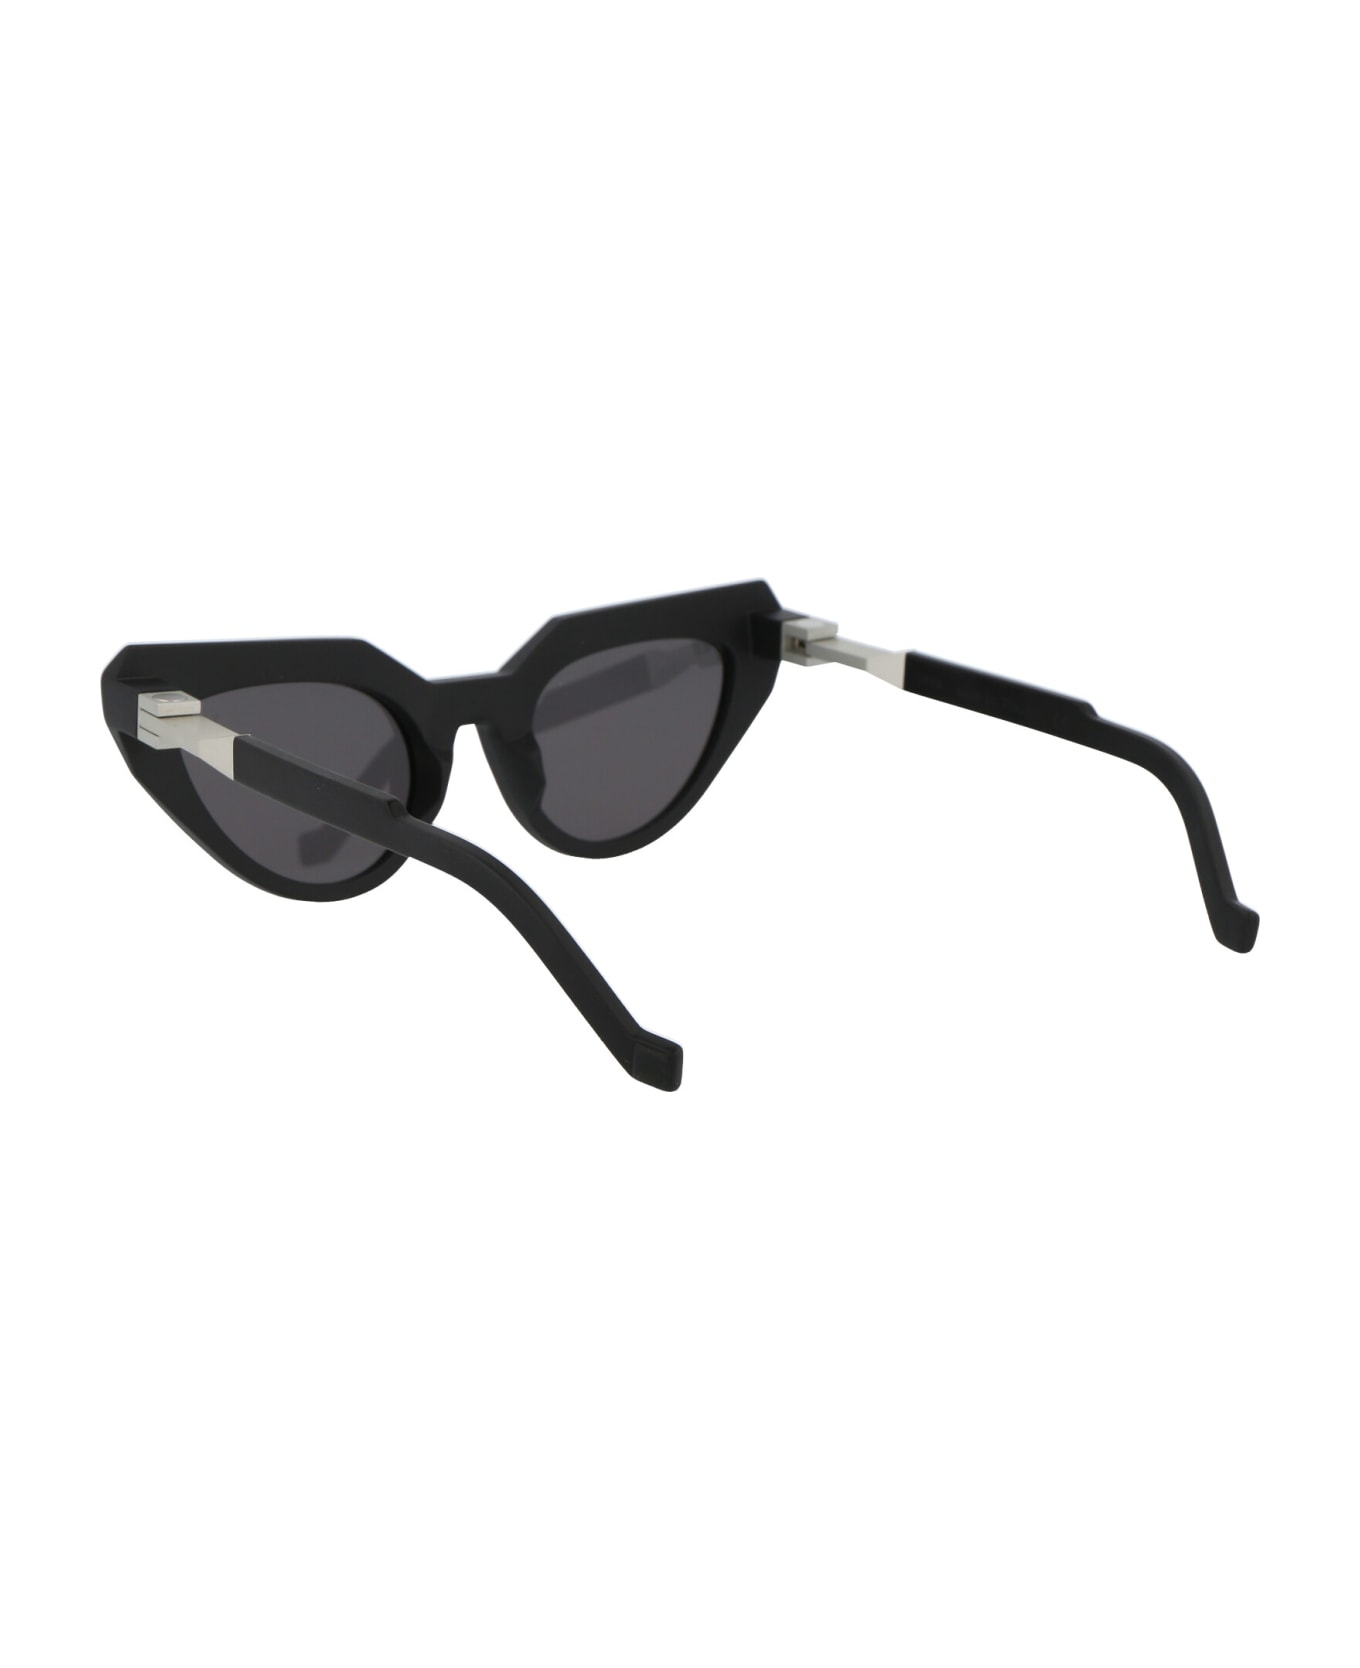 VAVA Bl0028 Sunglasses - MATTE BLACK|SILVER FLEX HINGES|BLACK LENSES サングラス